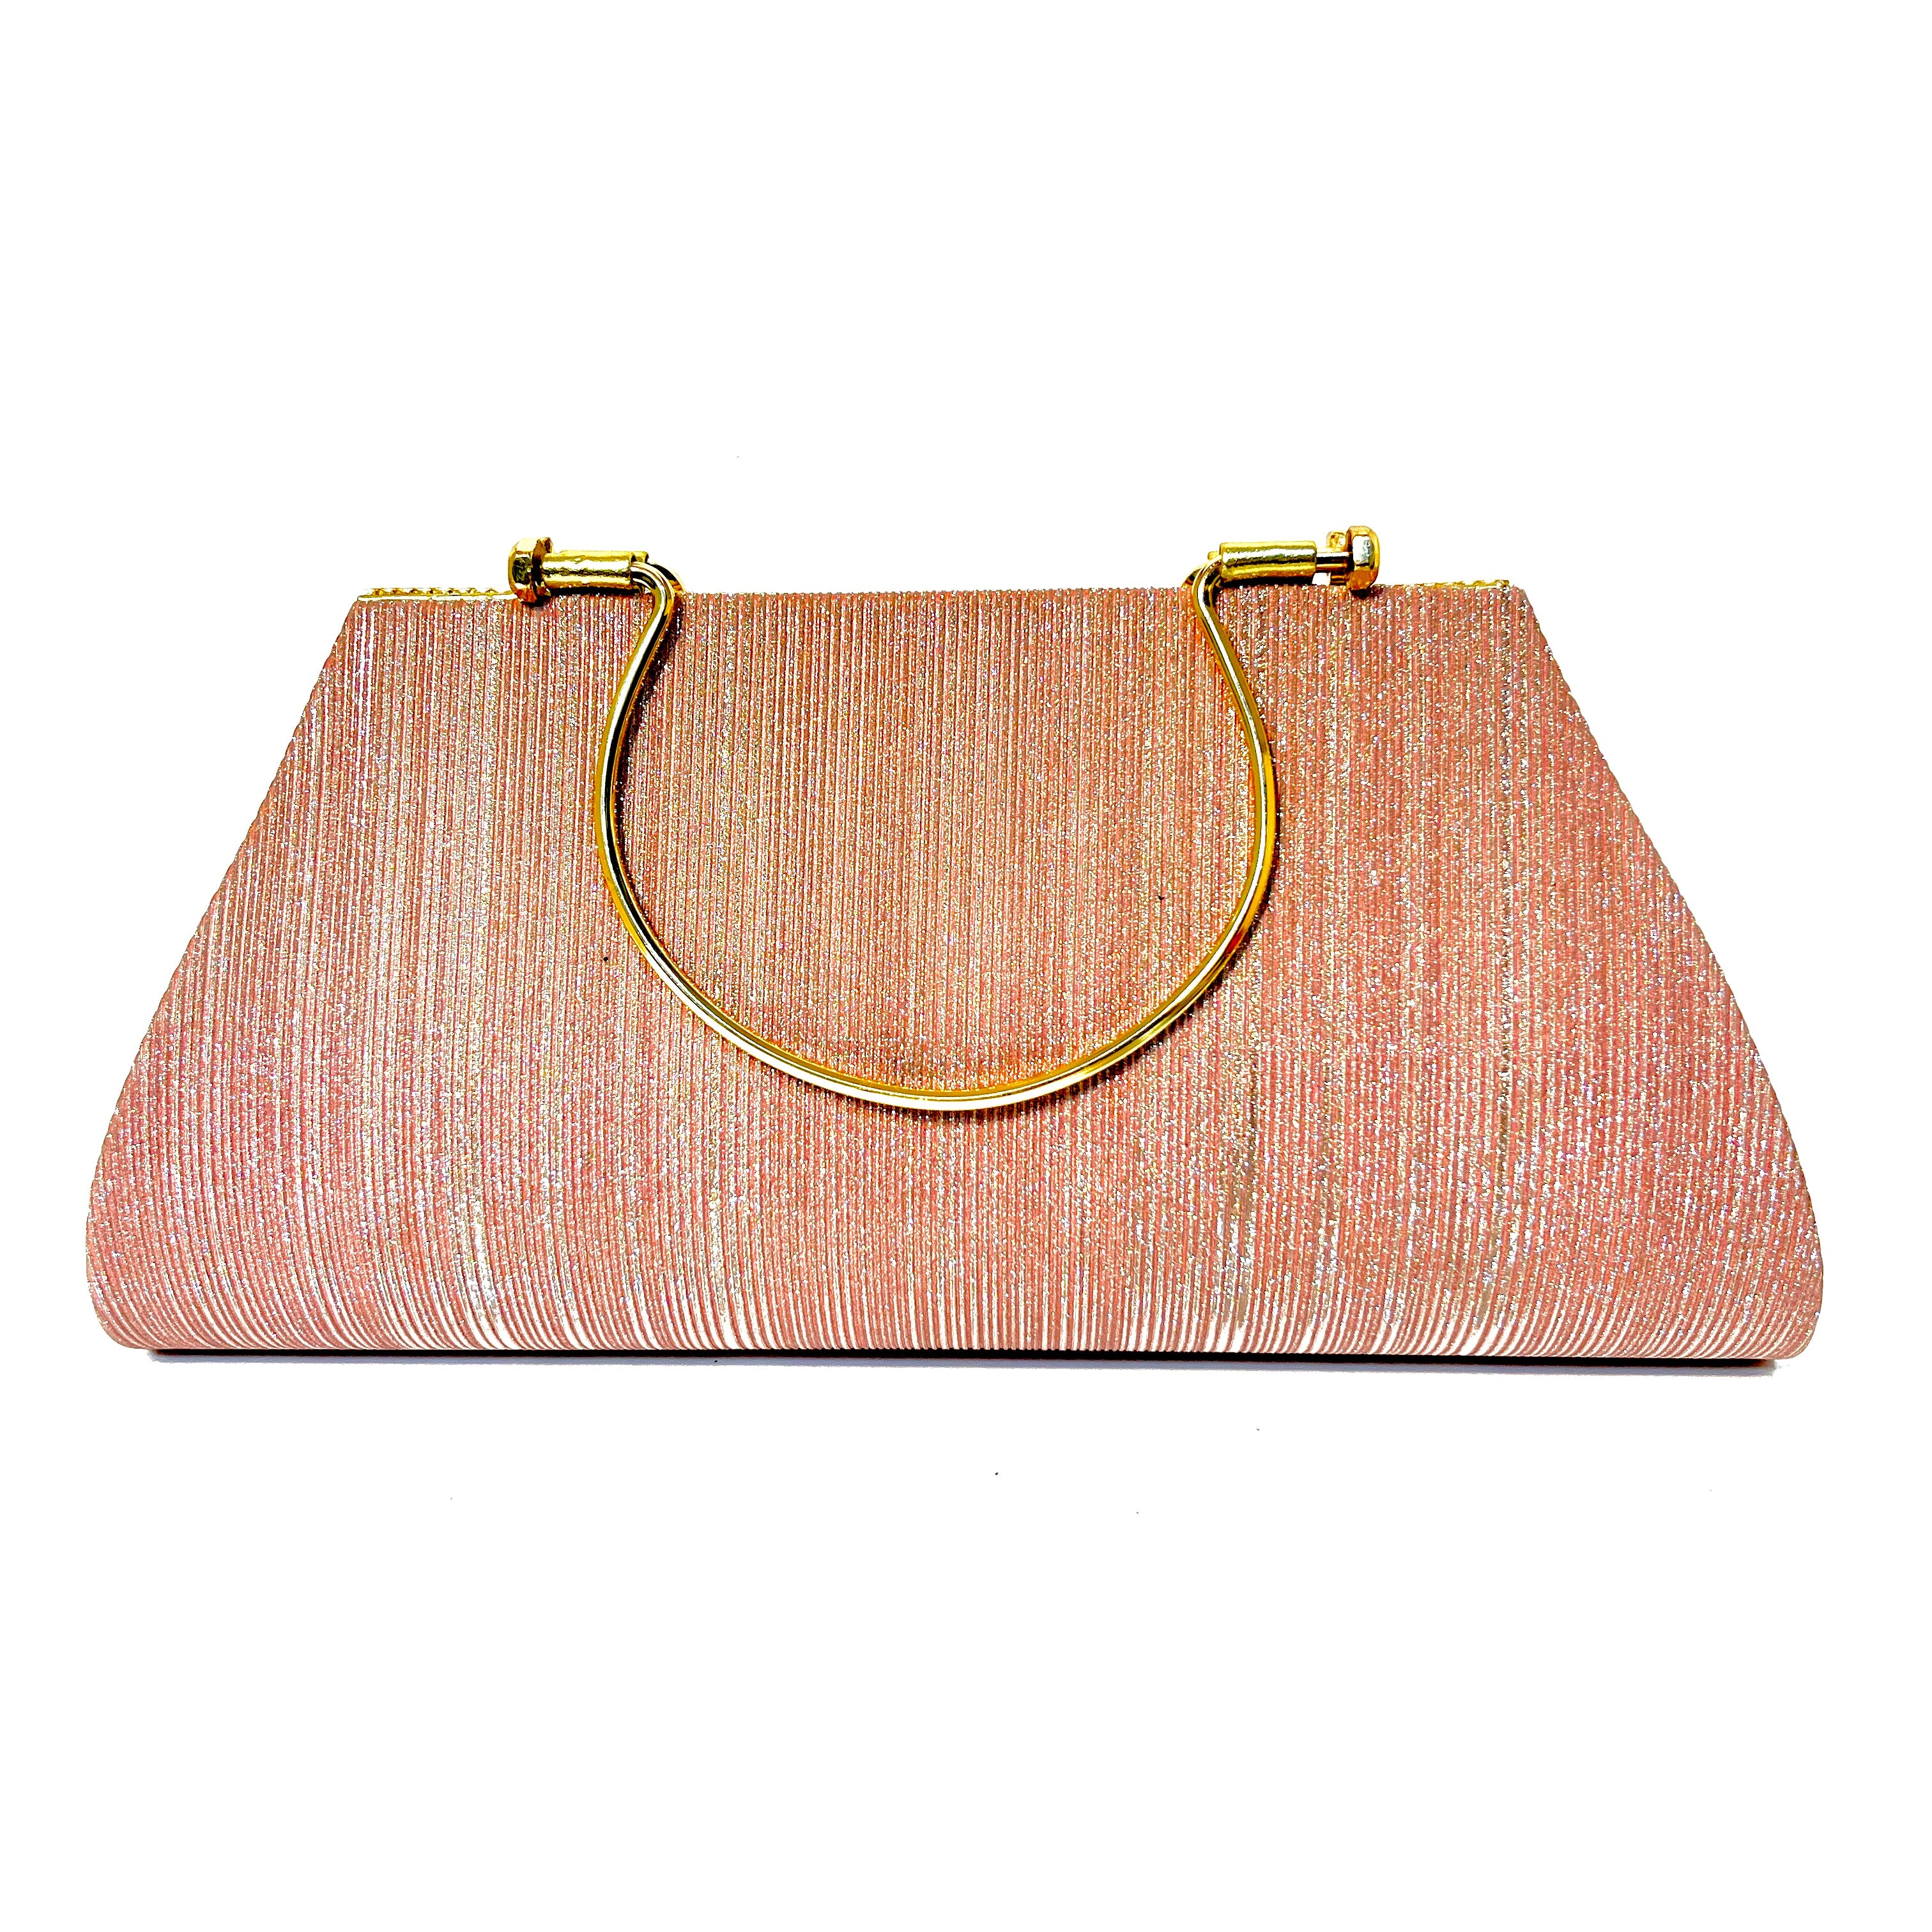 Handmade golden clutch Brass Metal bag antique bridal purse for her gift  item | eBay